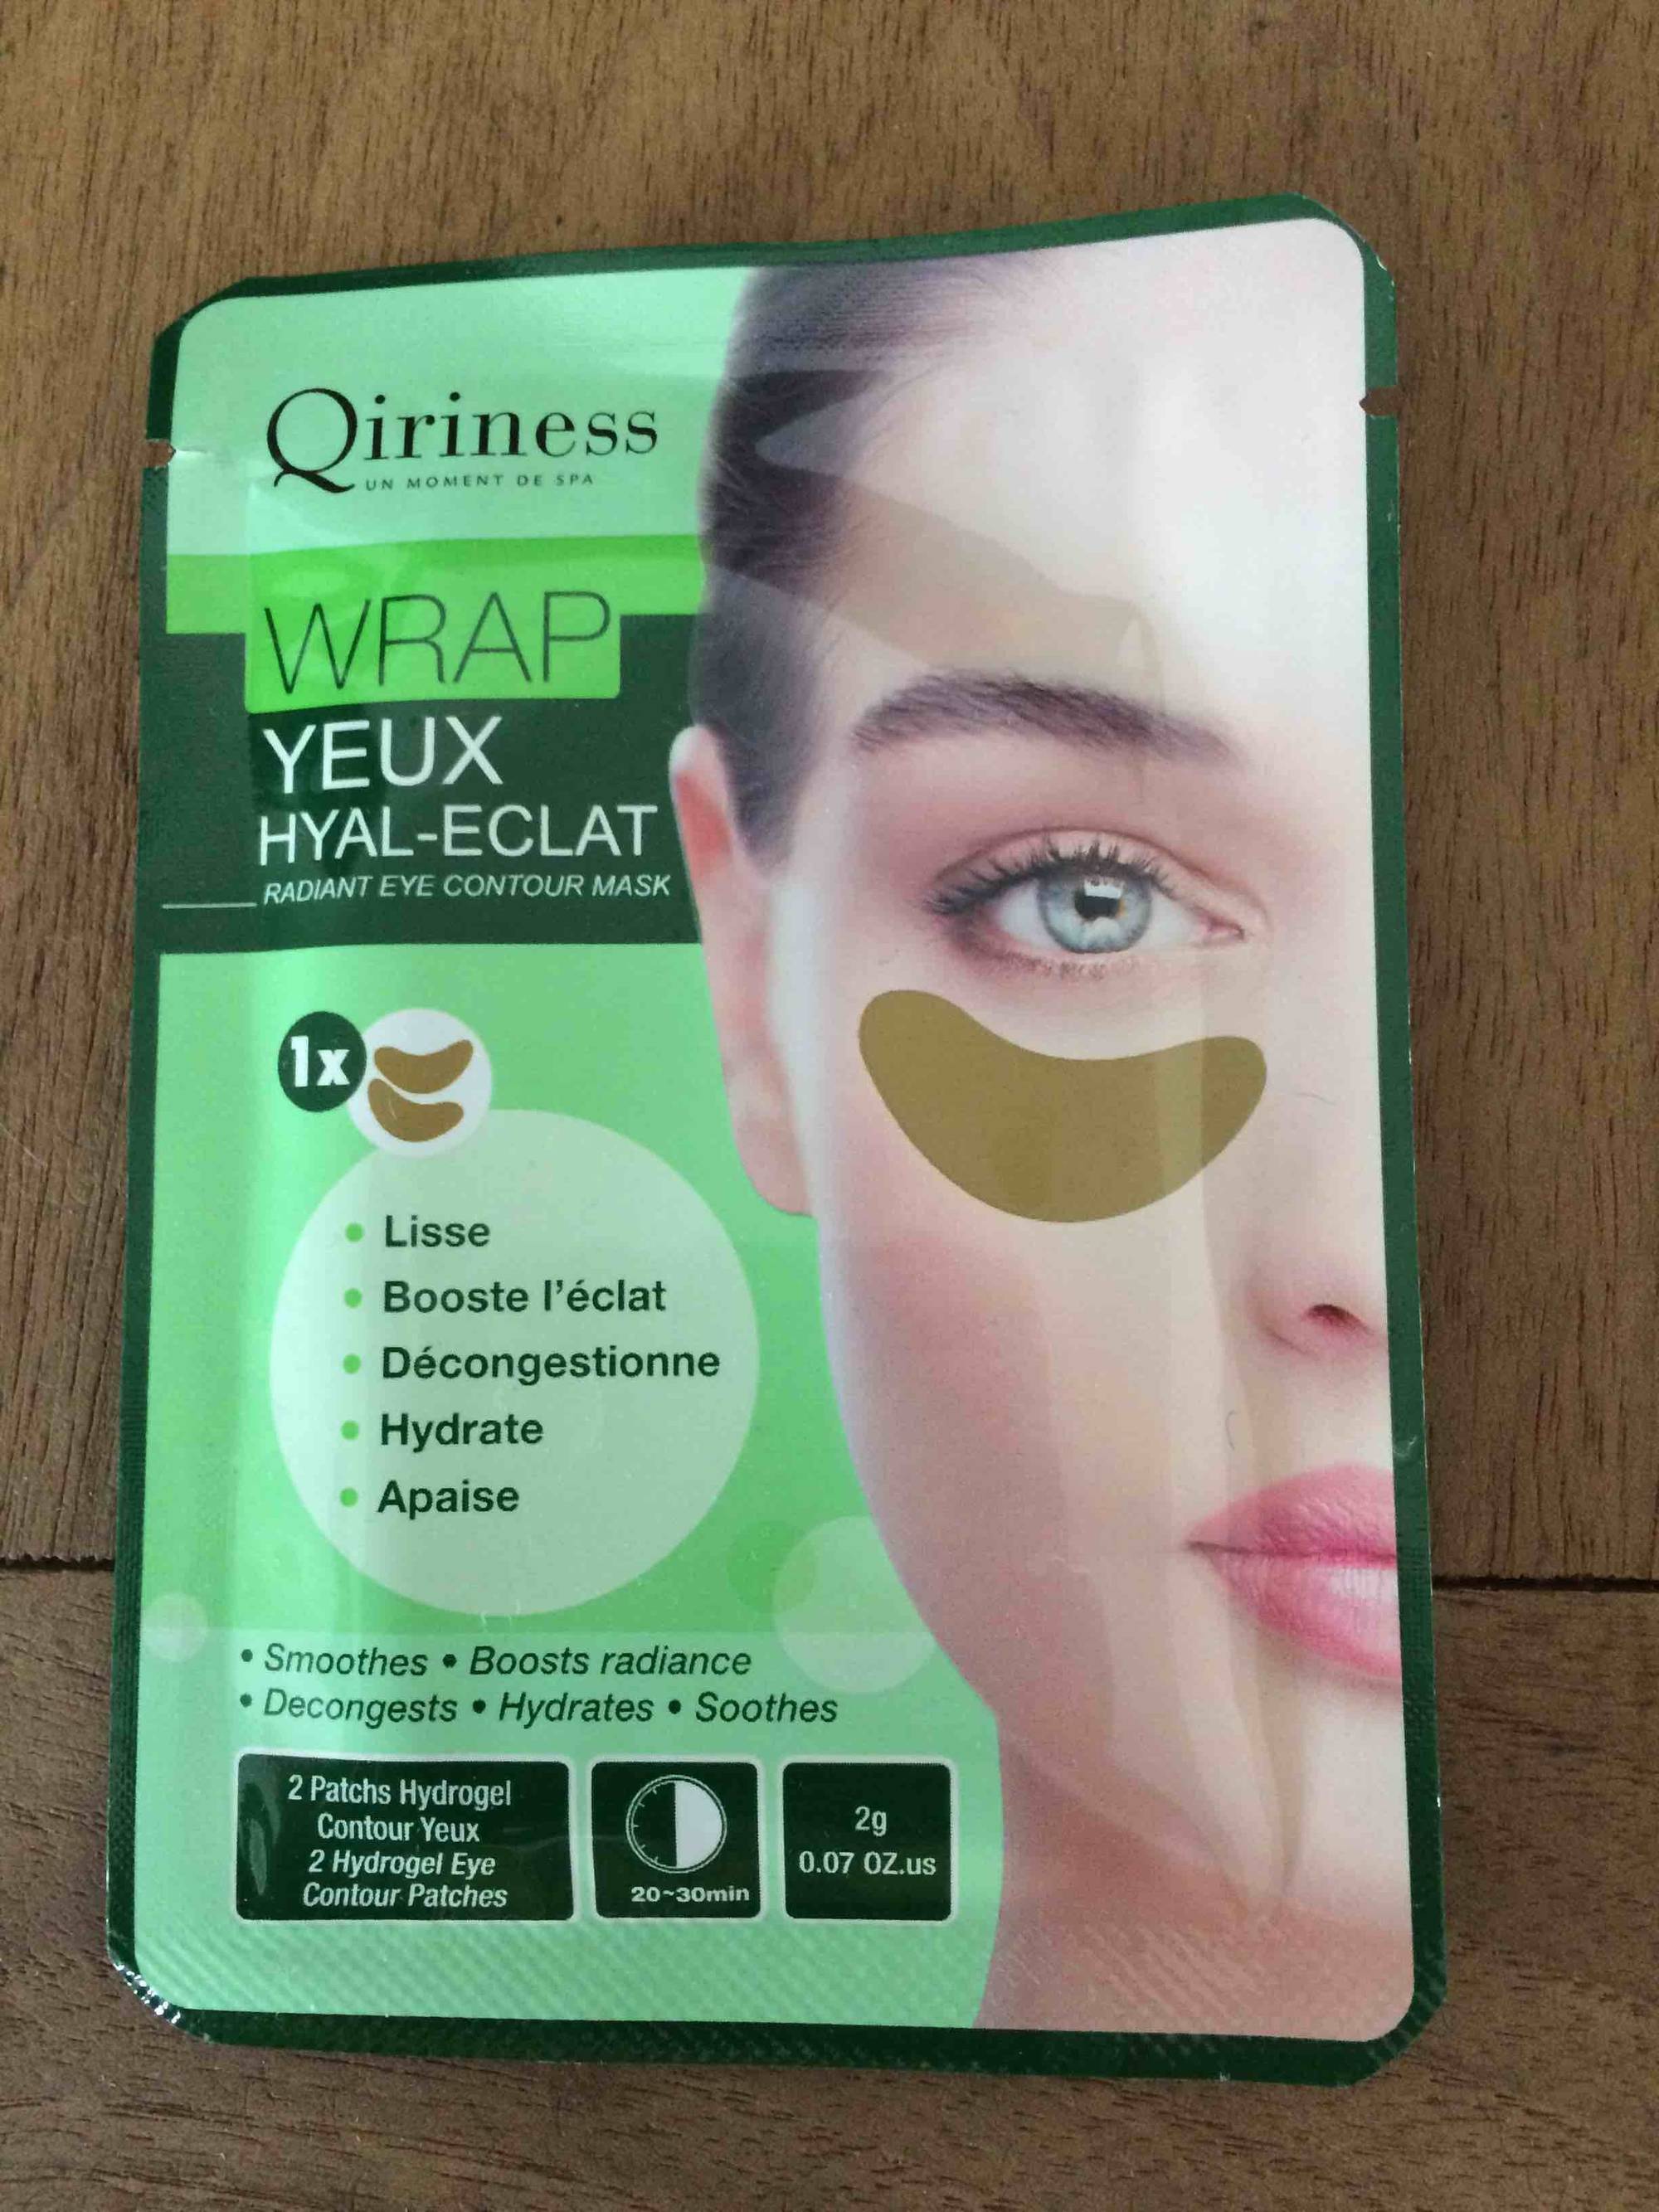 QIRINESS - Wrap yeux hyal-éclat - Radiant eye contour mask